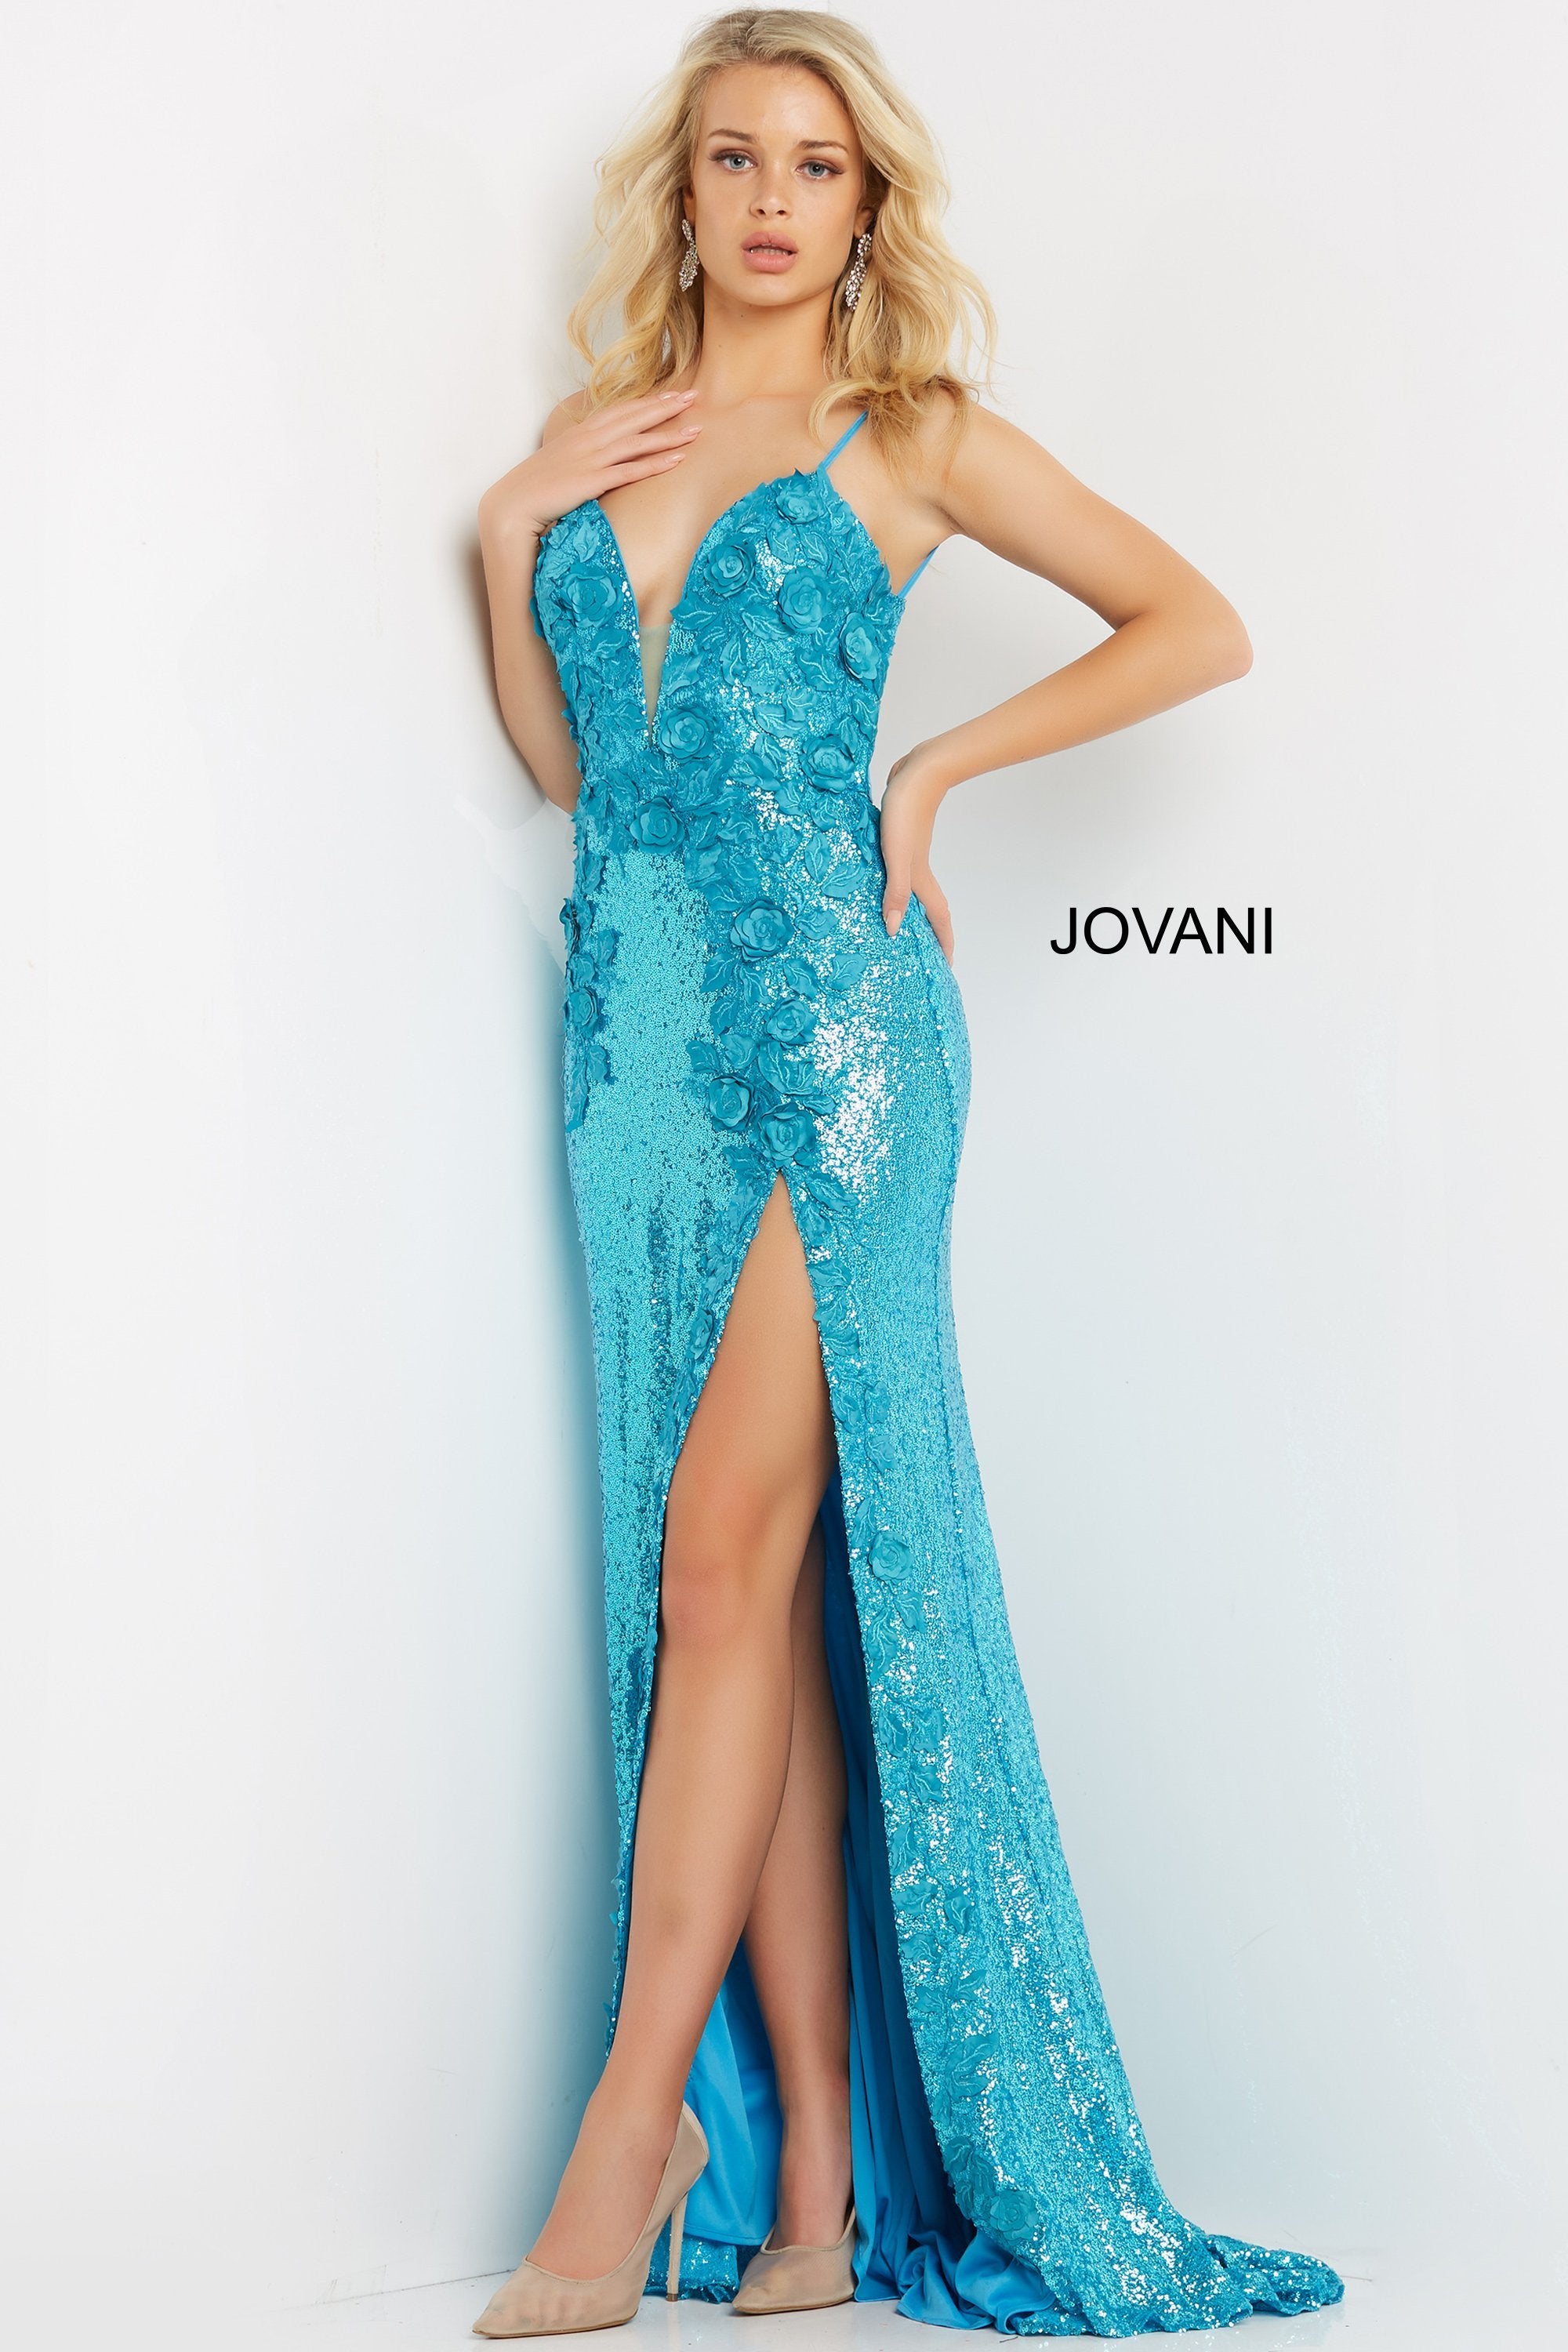 Jovani 1012 blue